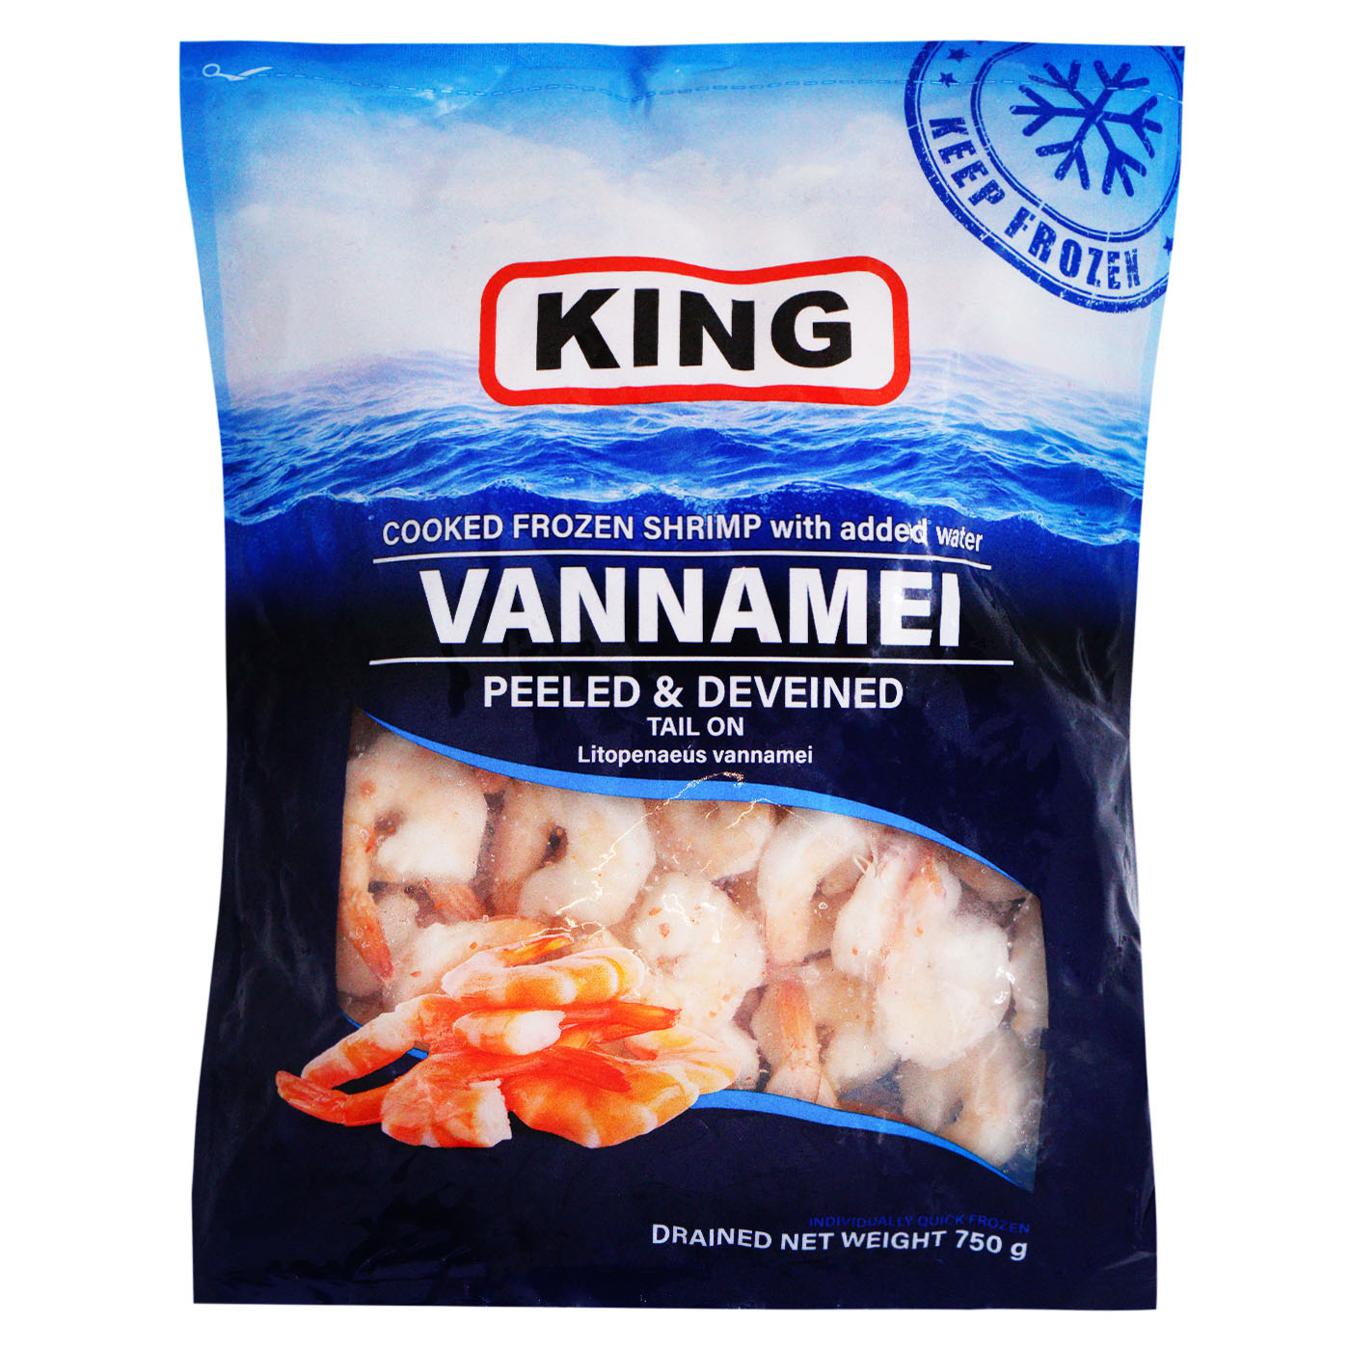 Peeled King shrimp with tail in glaze v/m 31/40 25% 750g